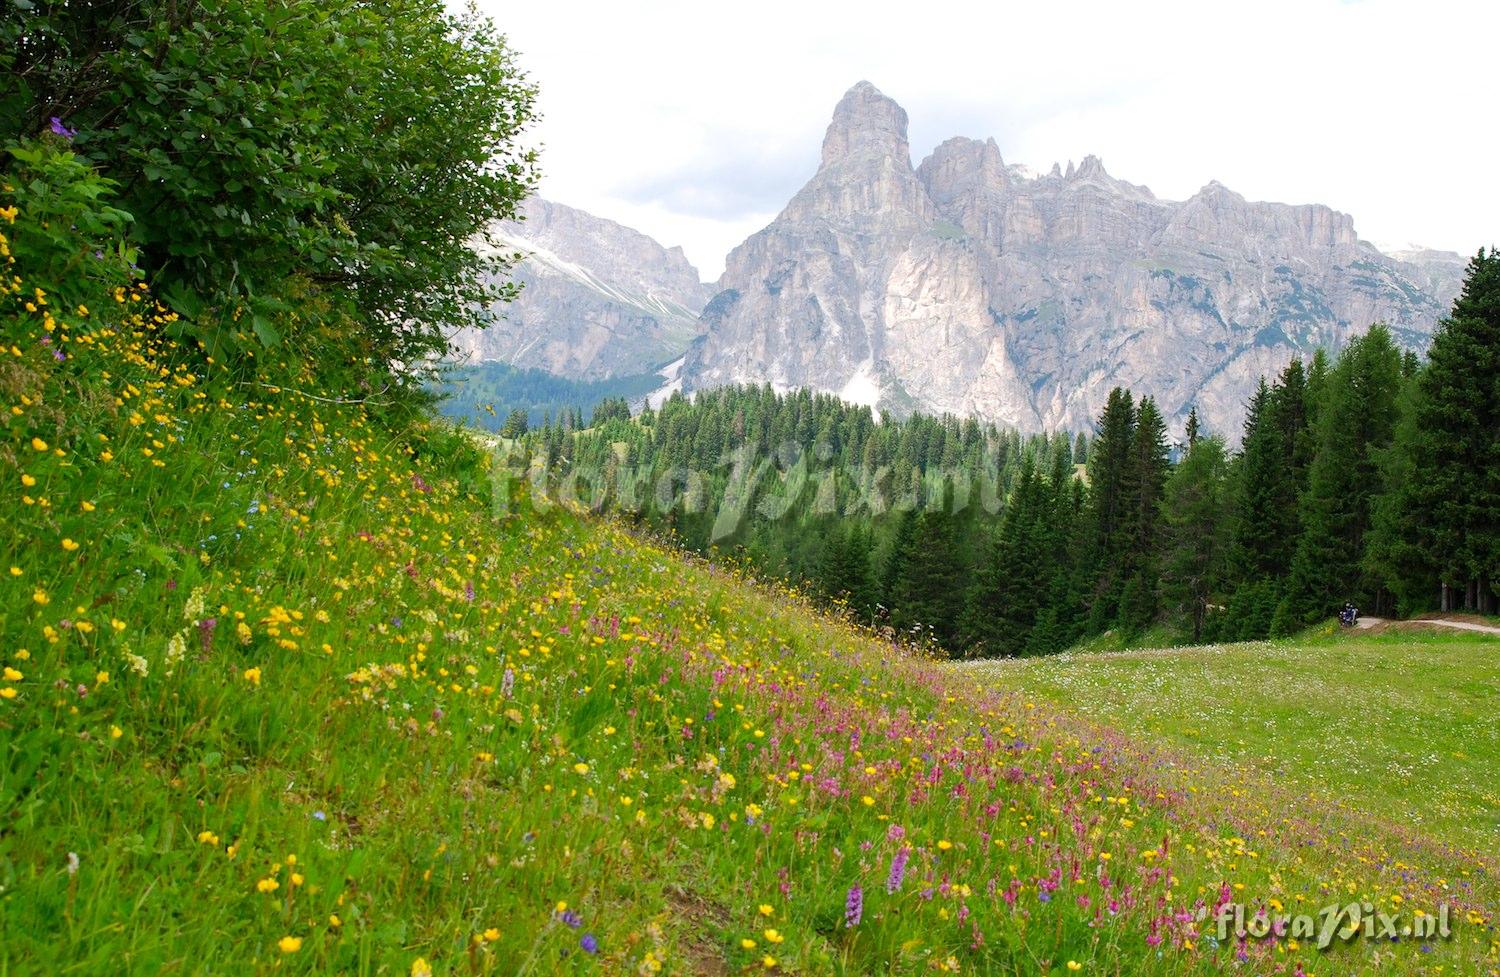 Dolomites meadow